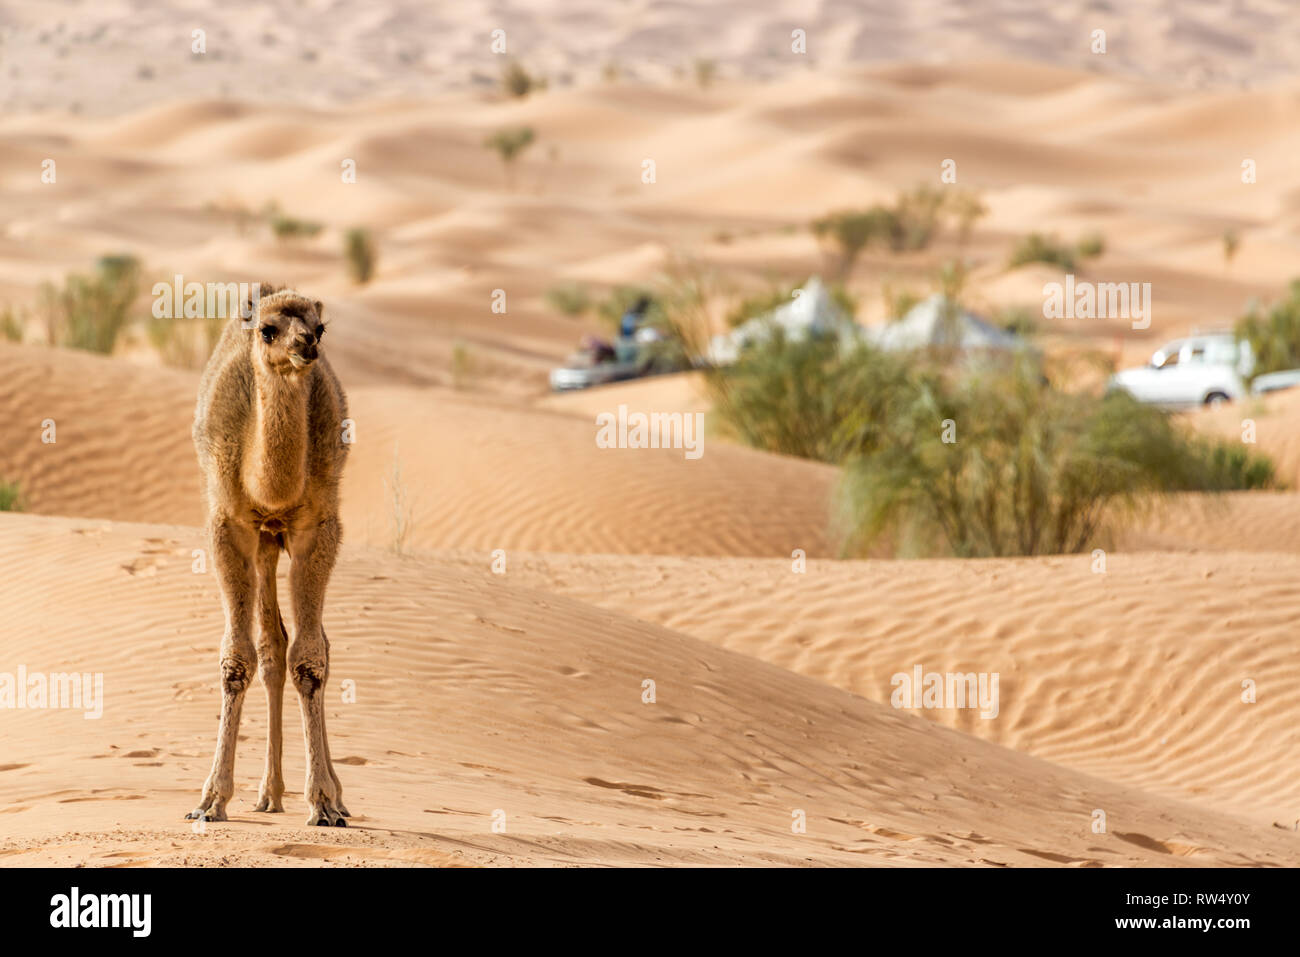 Young camel alone standing amongst the dunes of the Sahara Desert near Douz, Tunisia Stock Photo